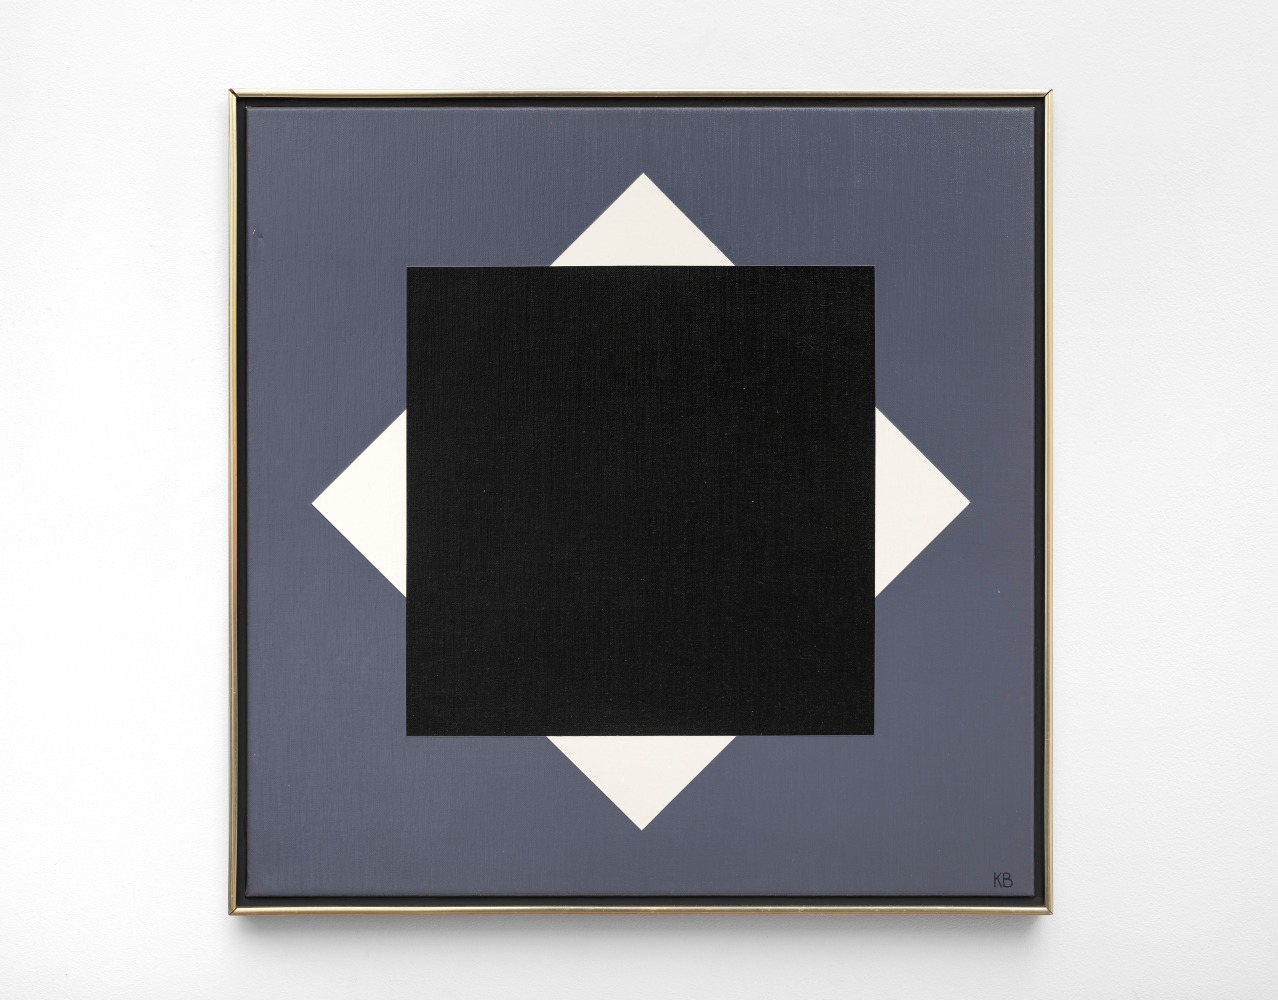 Karl Benjamin&amp;nbsp;(1925-2012)&amp;nbsp;
#46, 1965
oil on canvas
25 x 25 inches; 63.5 x 63.5 centimeters
LSFA# 1270